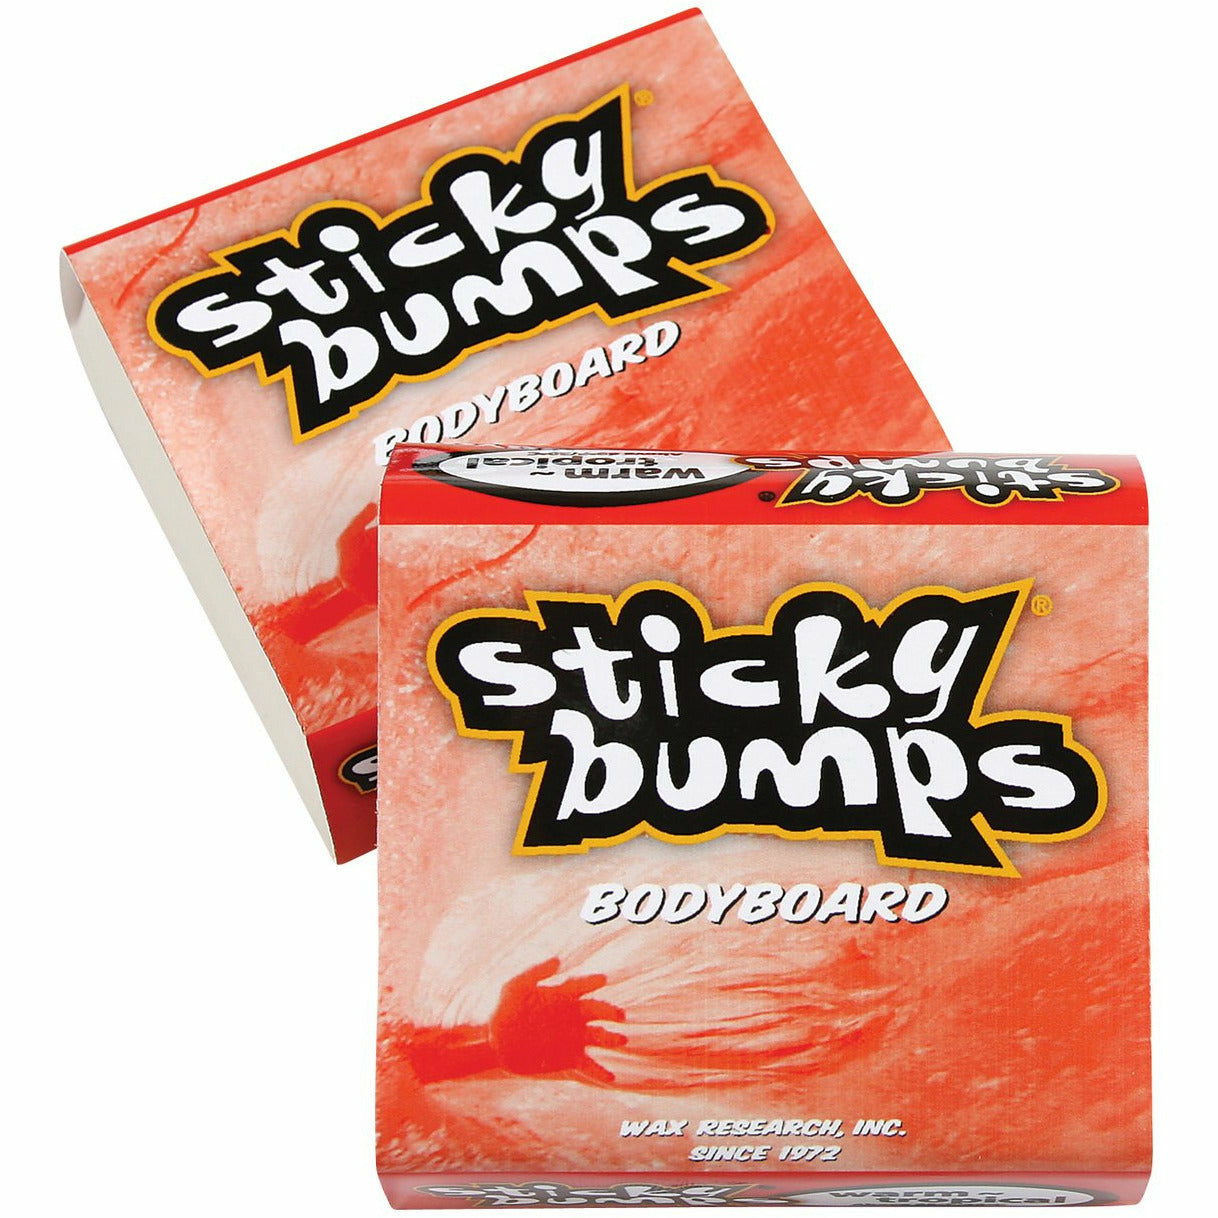 Sticky Bumps - Bodyboard Warm/Tropical (5 pack)